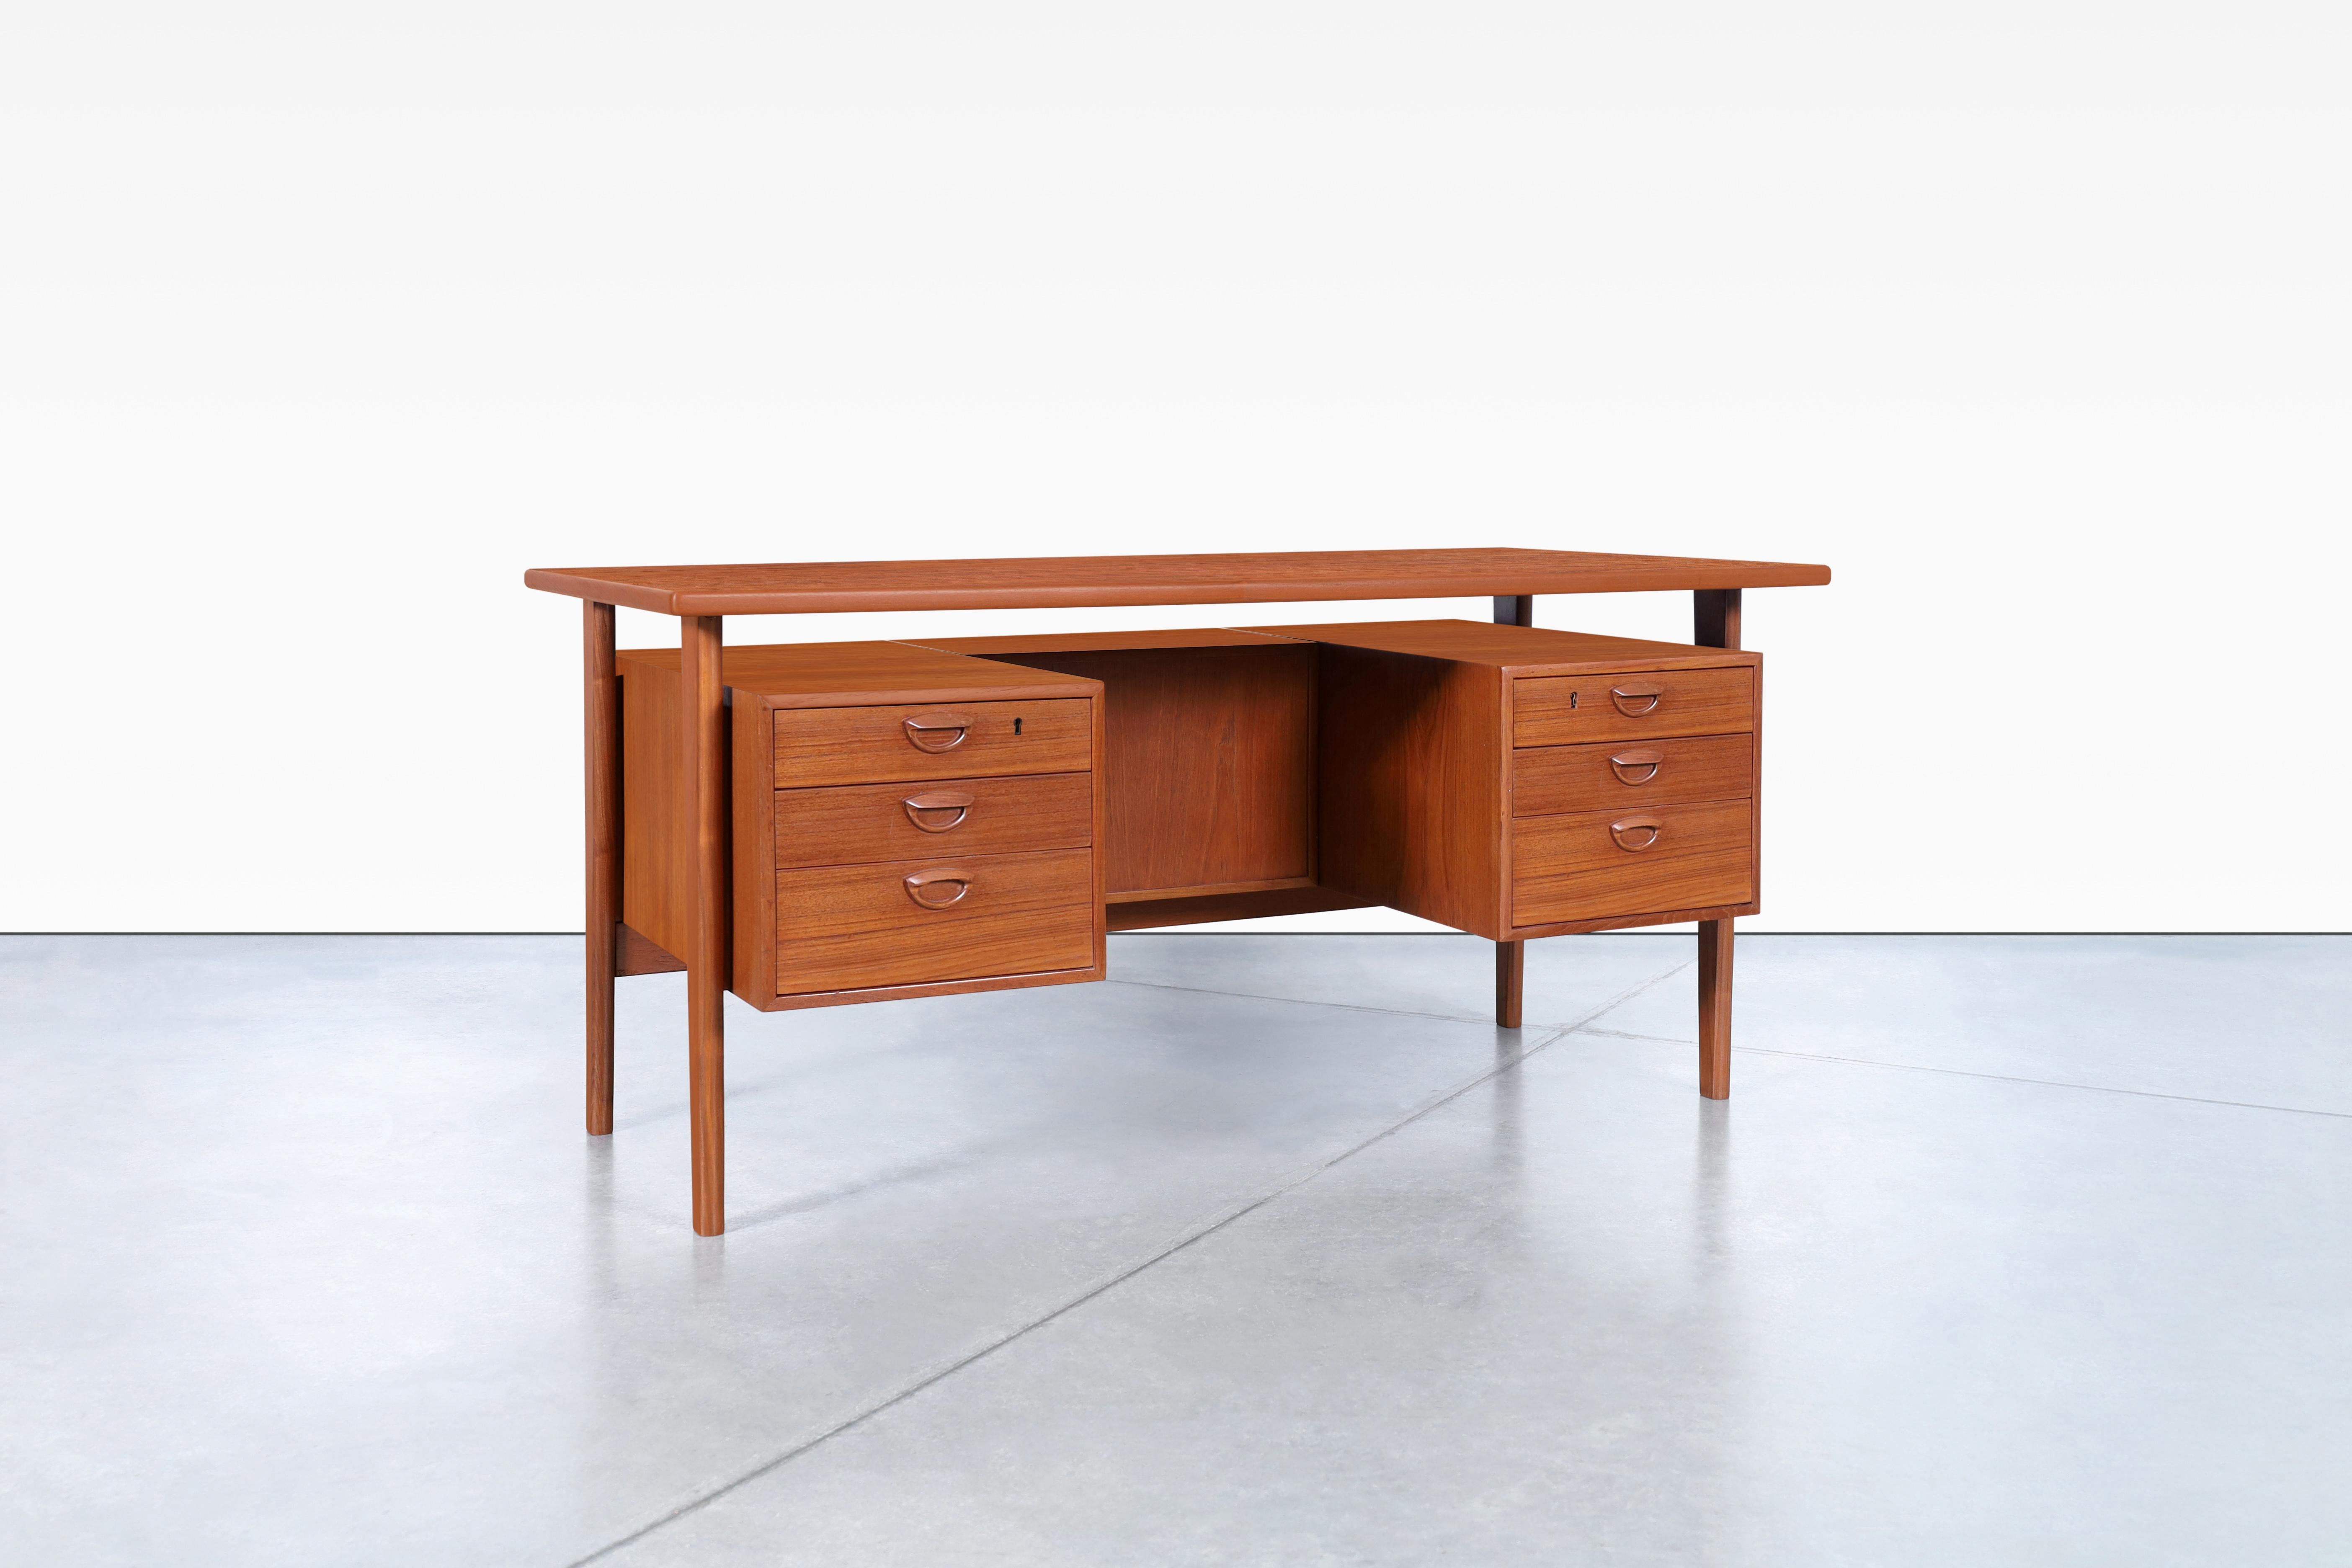 Stunning Danish modern teak desk designed by the famous cabinet maker Kai Kristiansen for Feldballes Møbelfrabrik in Denmark, circa 1960s. The FM60 desk is a highly sought-after Scandinavian design that showcases the natural beauty of teak wood. Its